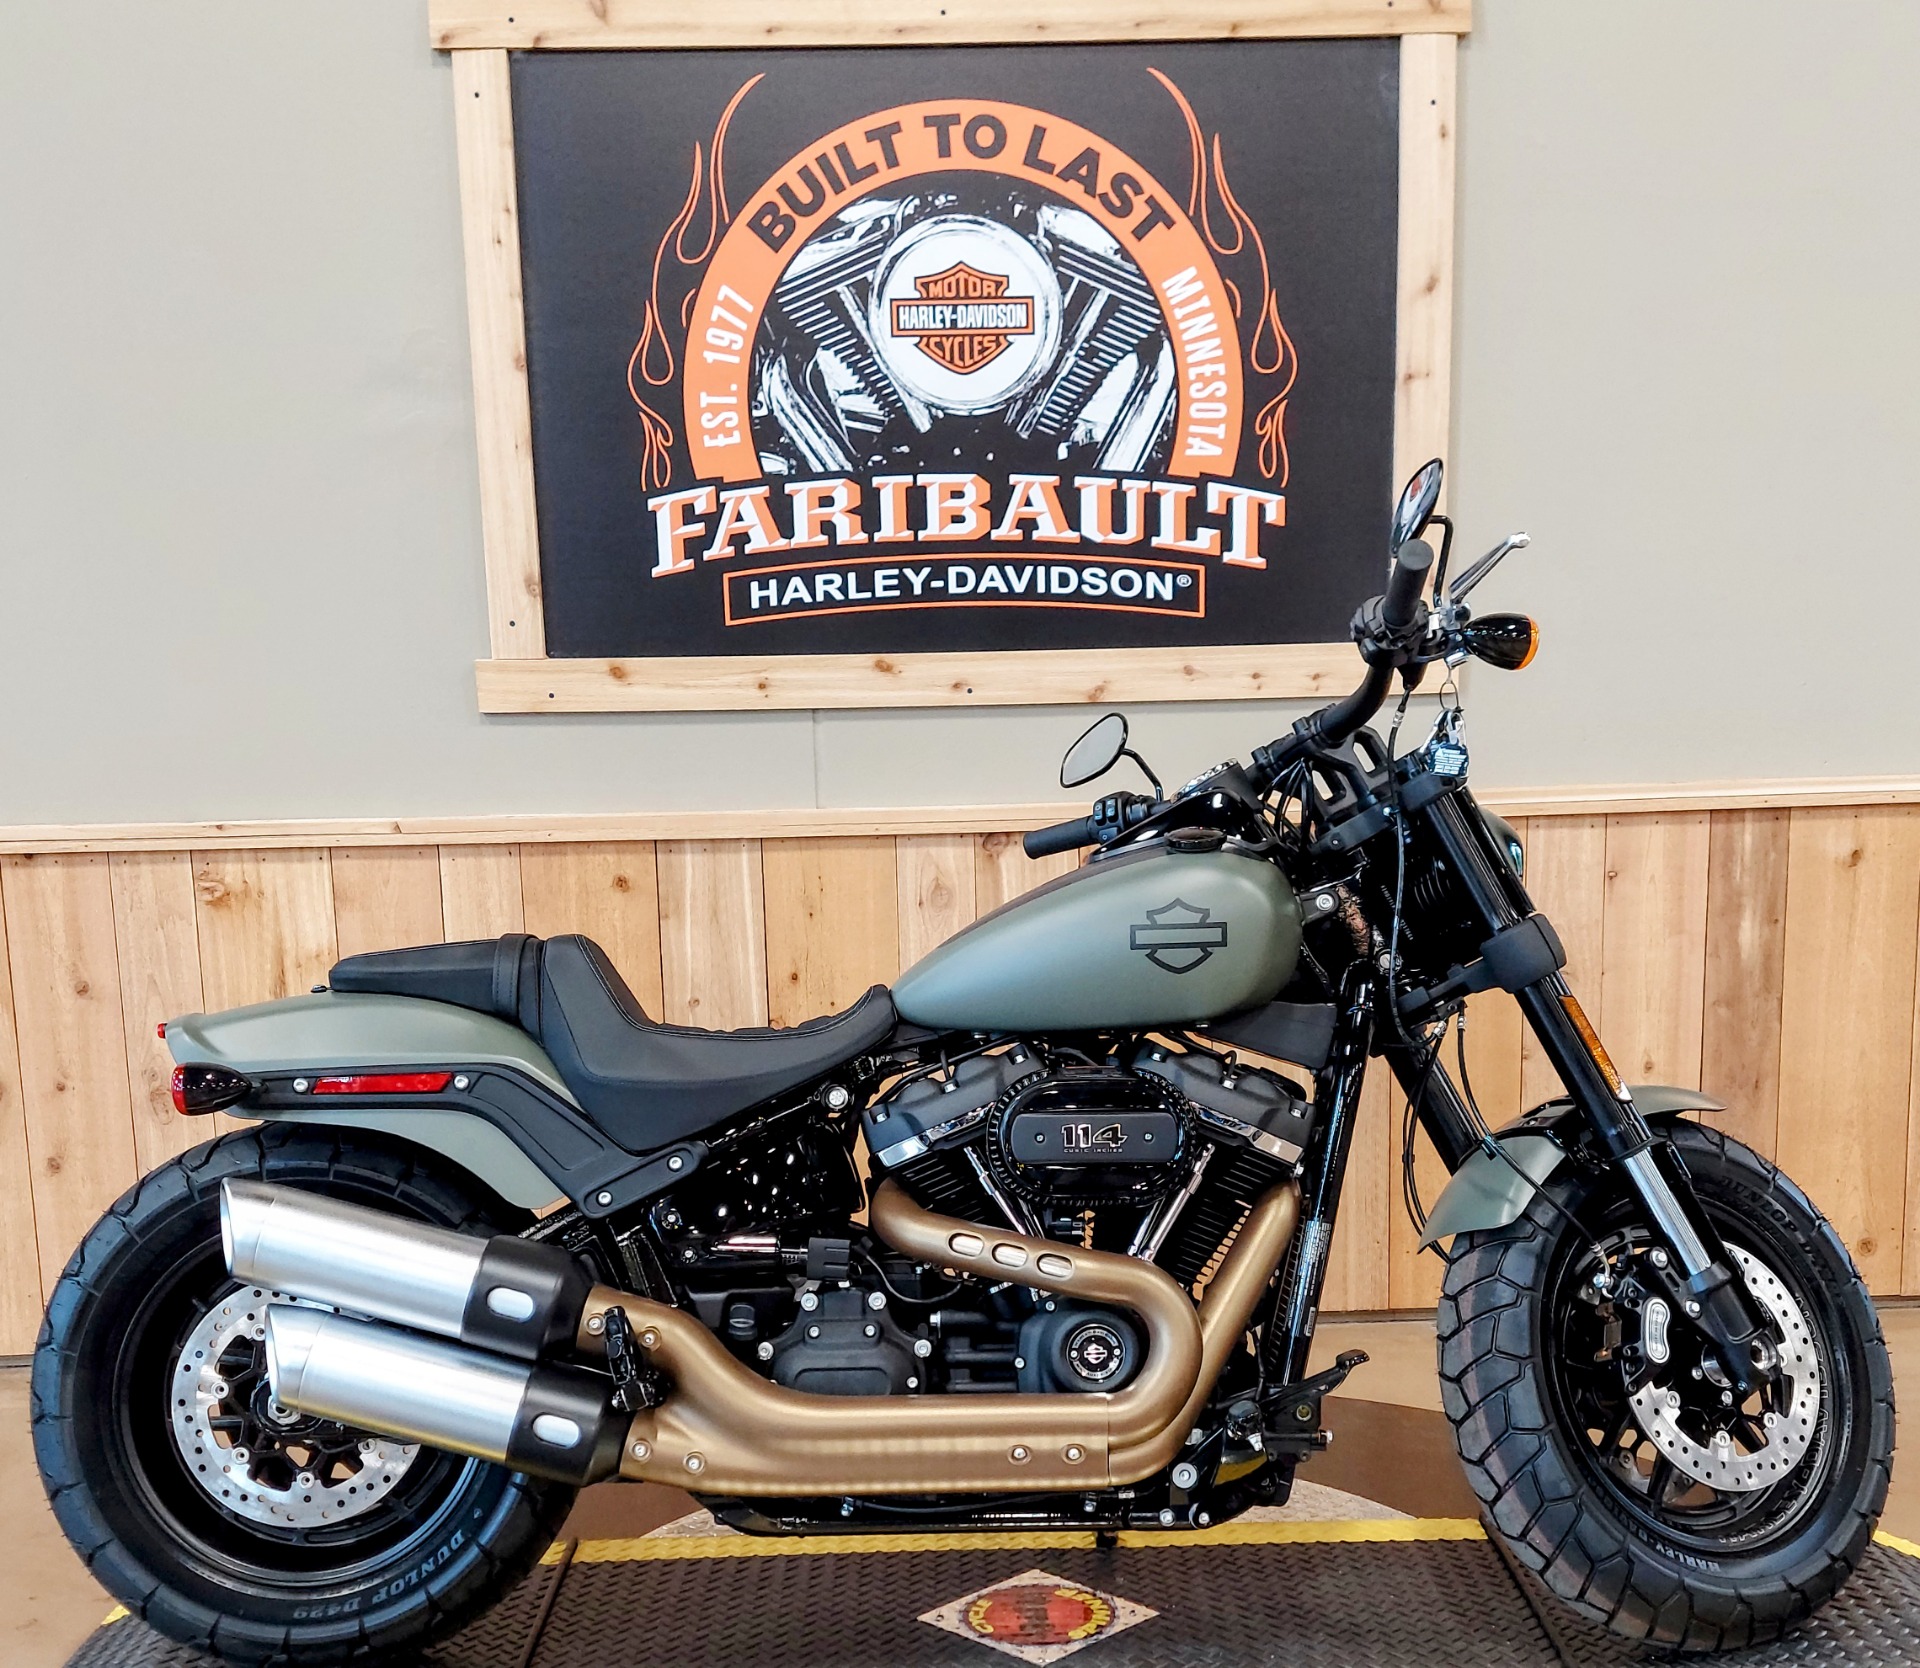 New 2021 Harley Davidson Fat Bob 114 Motorcycles In Faribault Mn Sf031766 Deadwood Green Denim